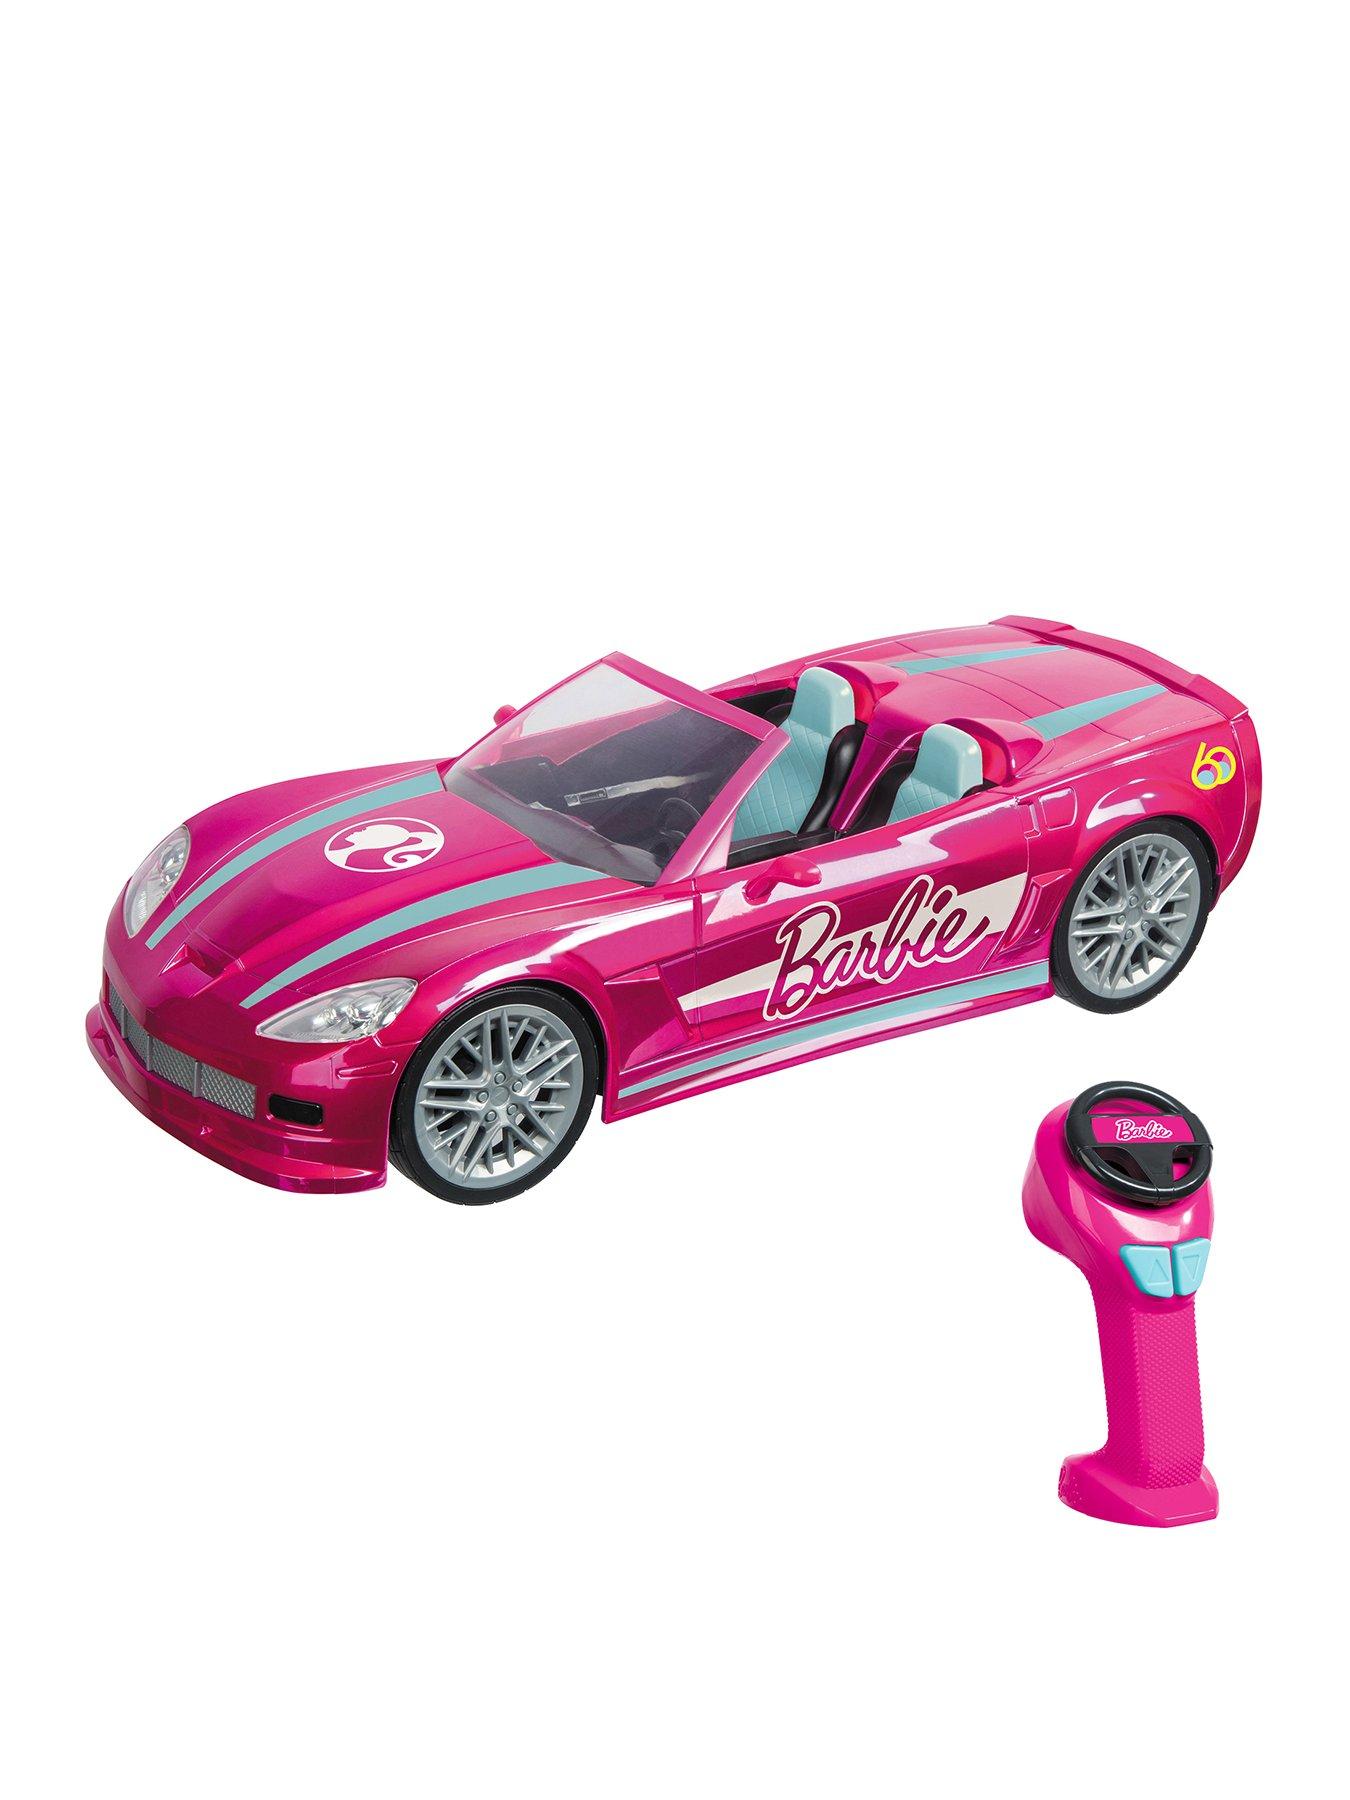 barbie remote control car amazon